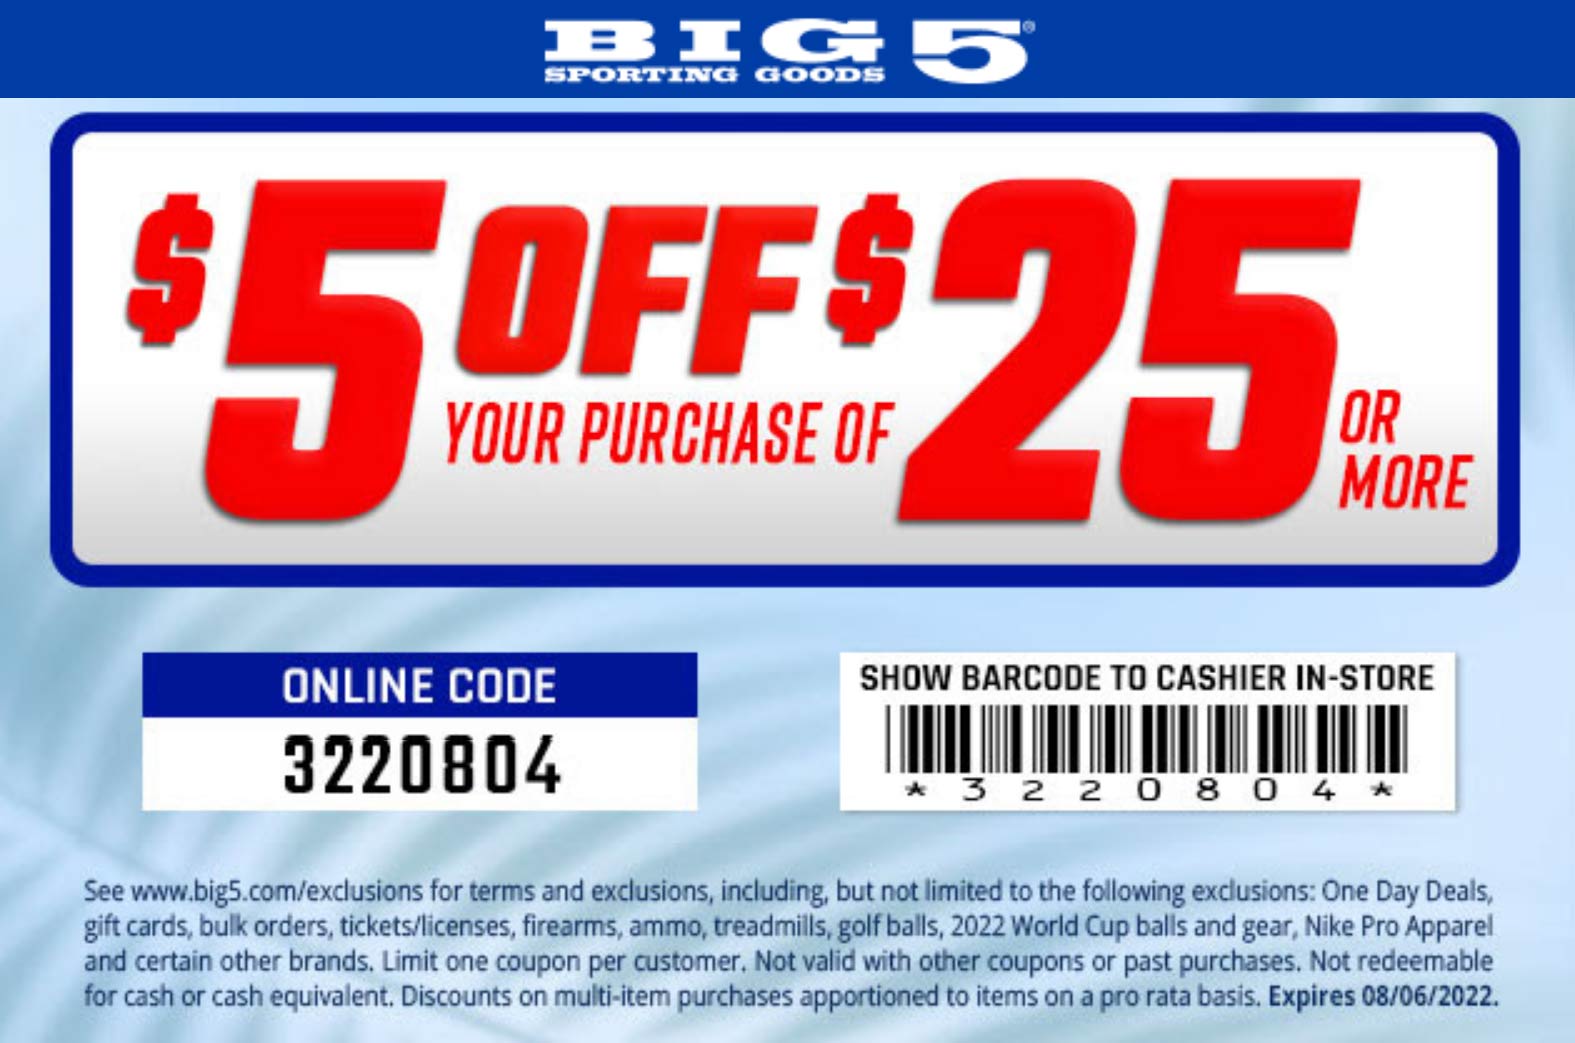 Big 5 stores Coupon  $5 off $25 at Big 5 sporting goods, or online via promo code 3220804 #big5 